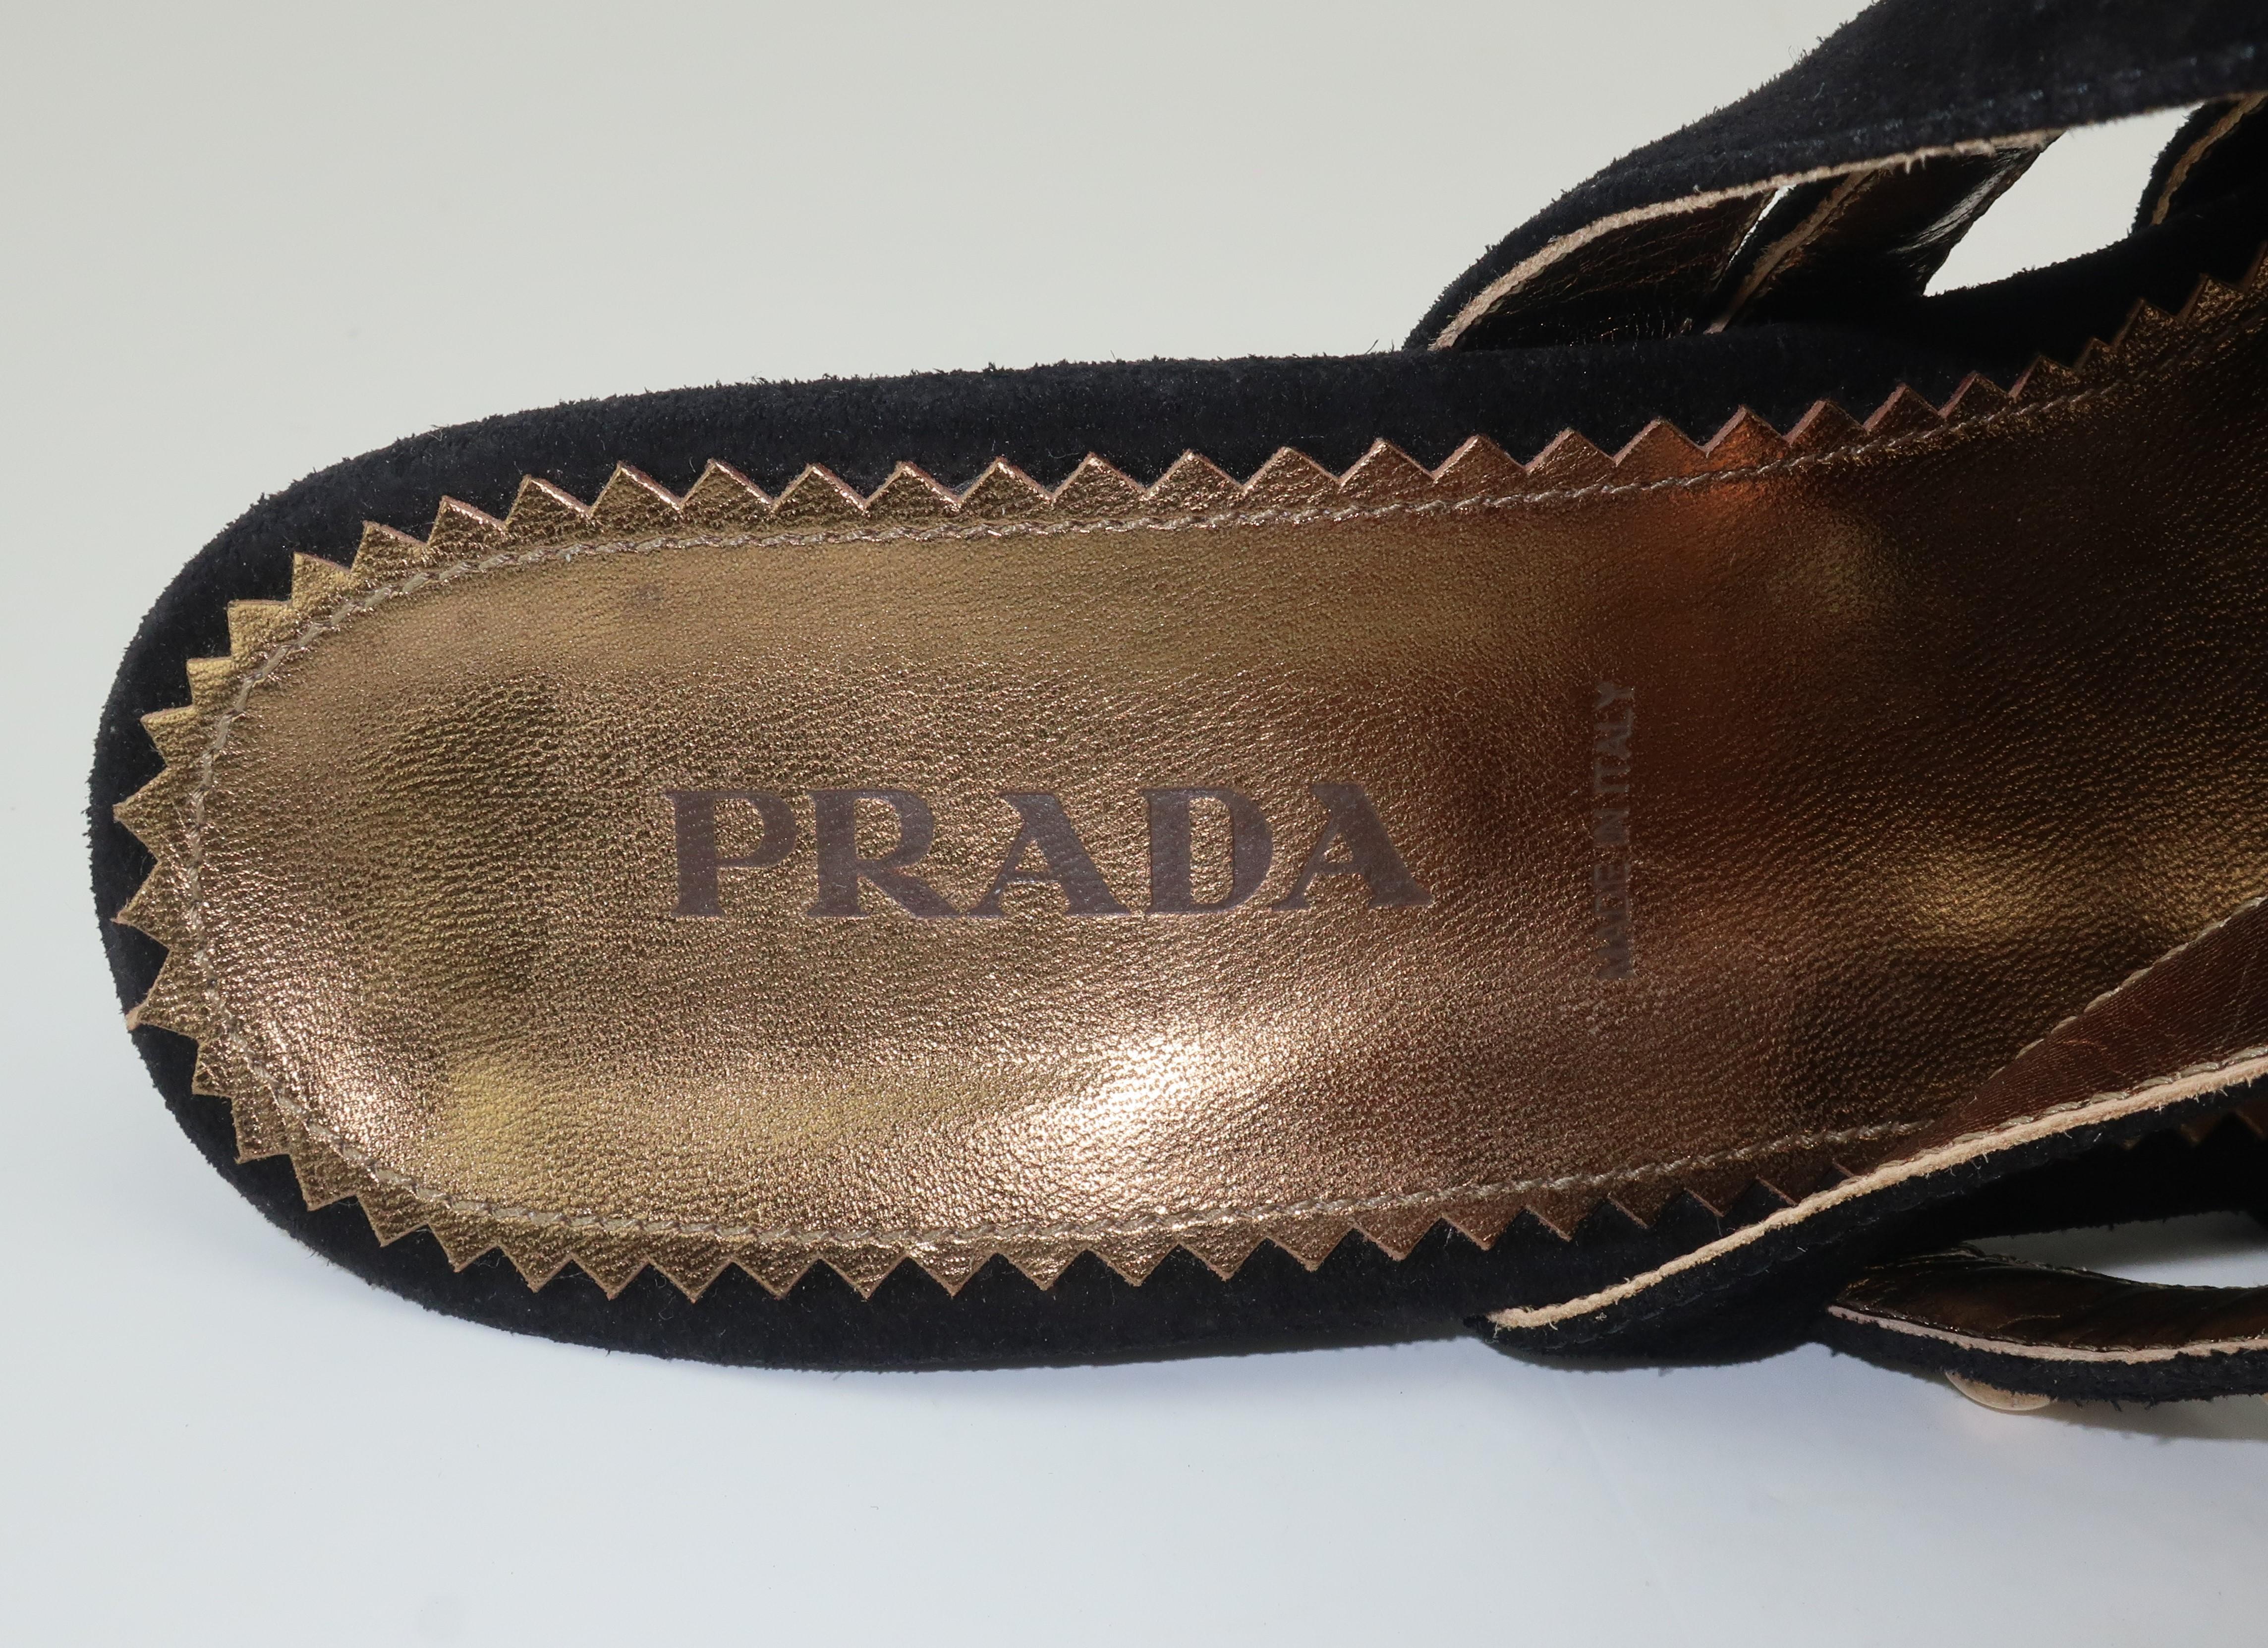 Prada Black Suede & Gold Stud Sandals Shoes Sz 38 For Sale 4